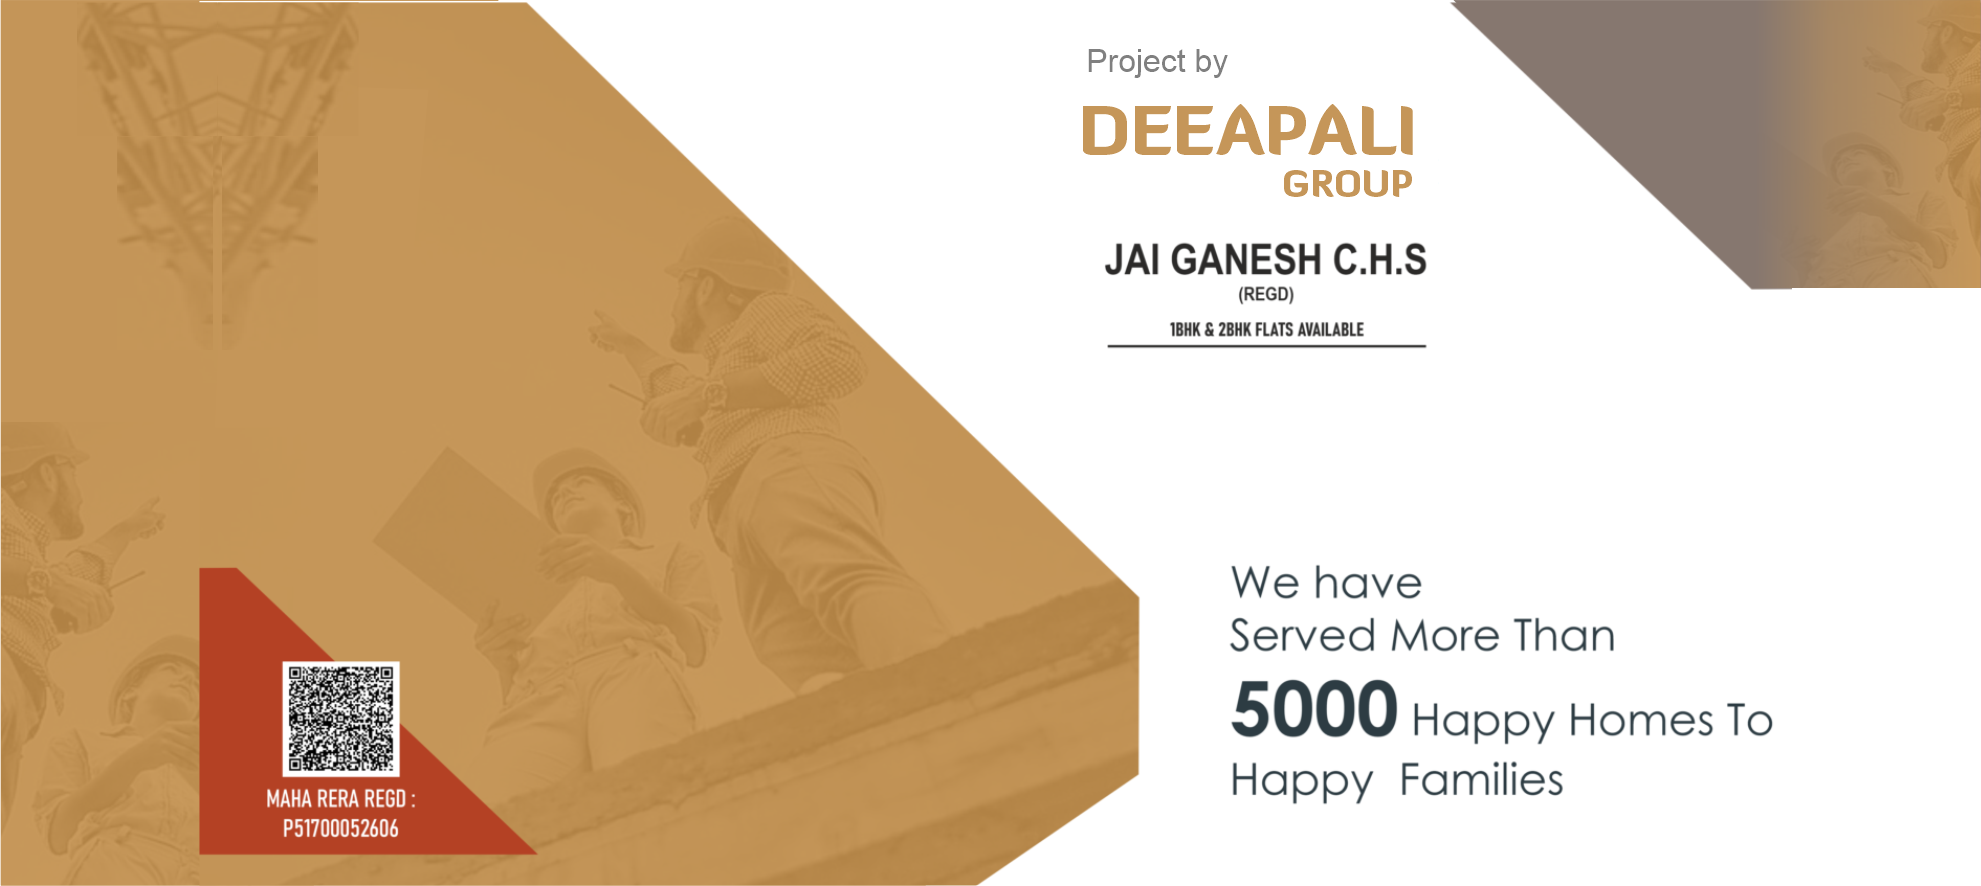 Deepali Landscape project by Deepali Group at Badlapur